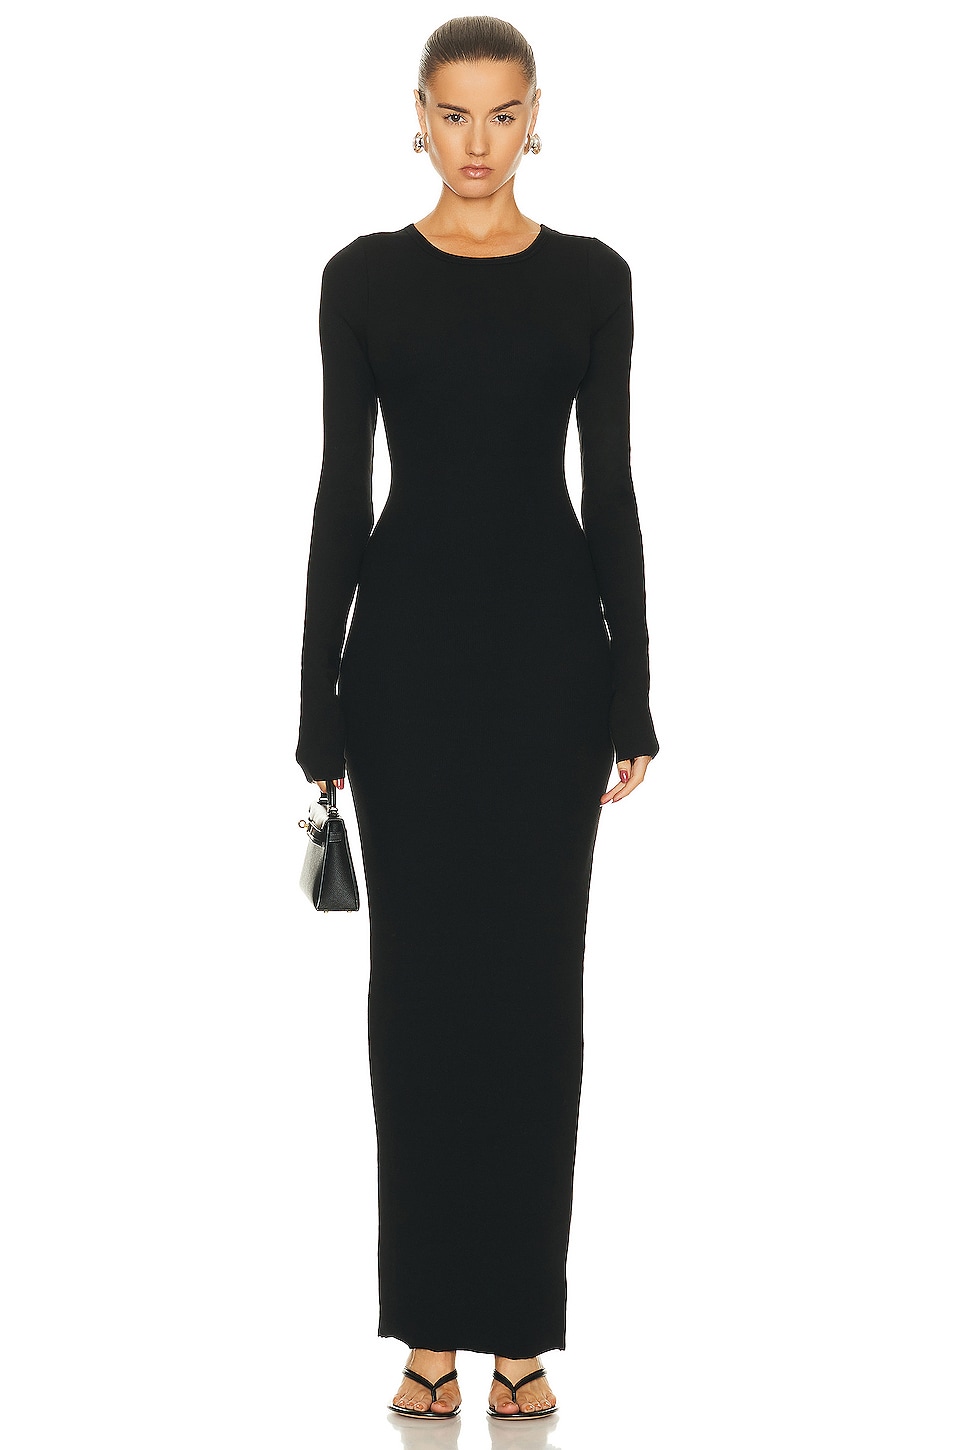 Eterne Long Sleeve Crewneck Maxi Dress in Black | FWRD